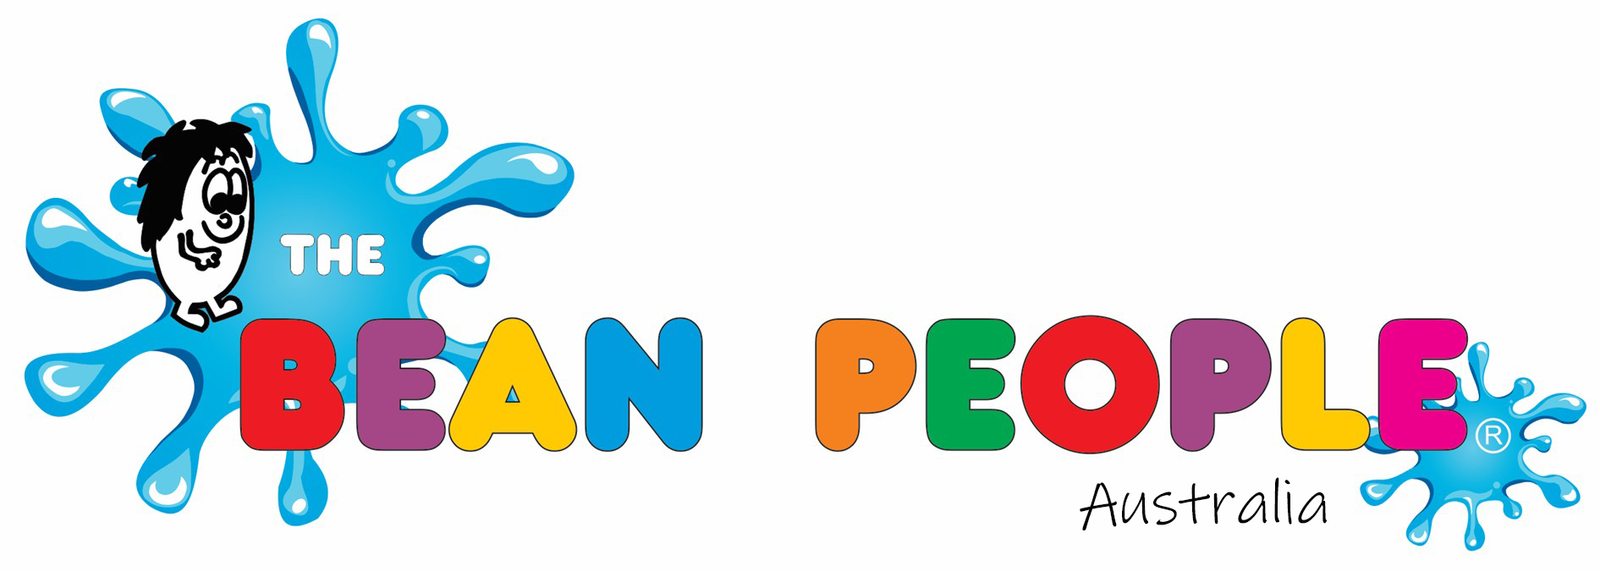 The Bean People Australia